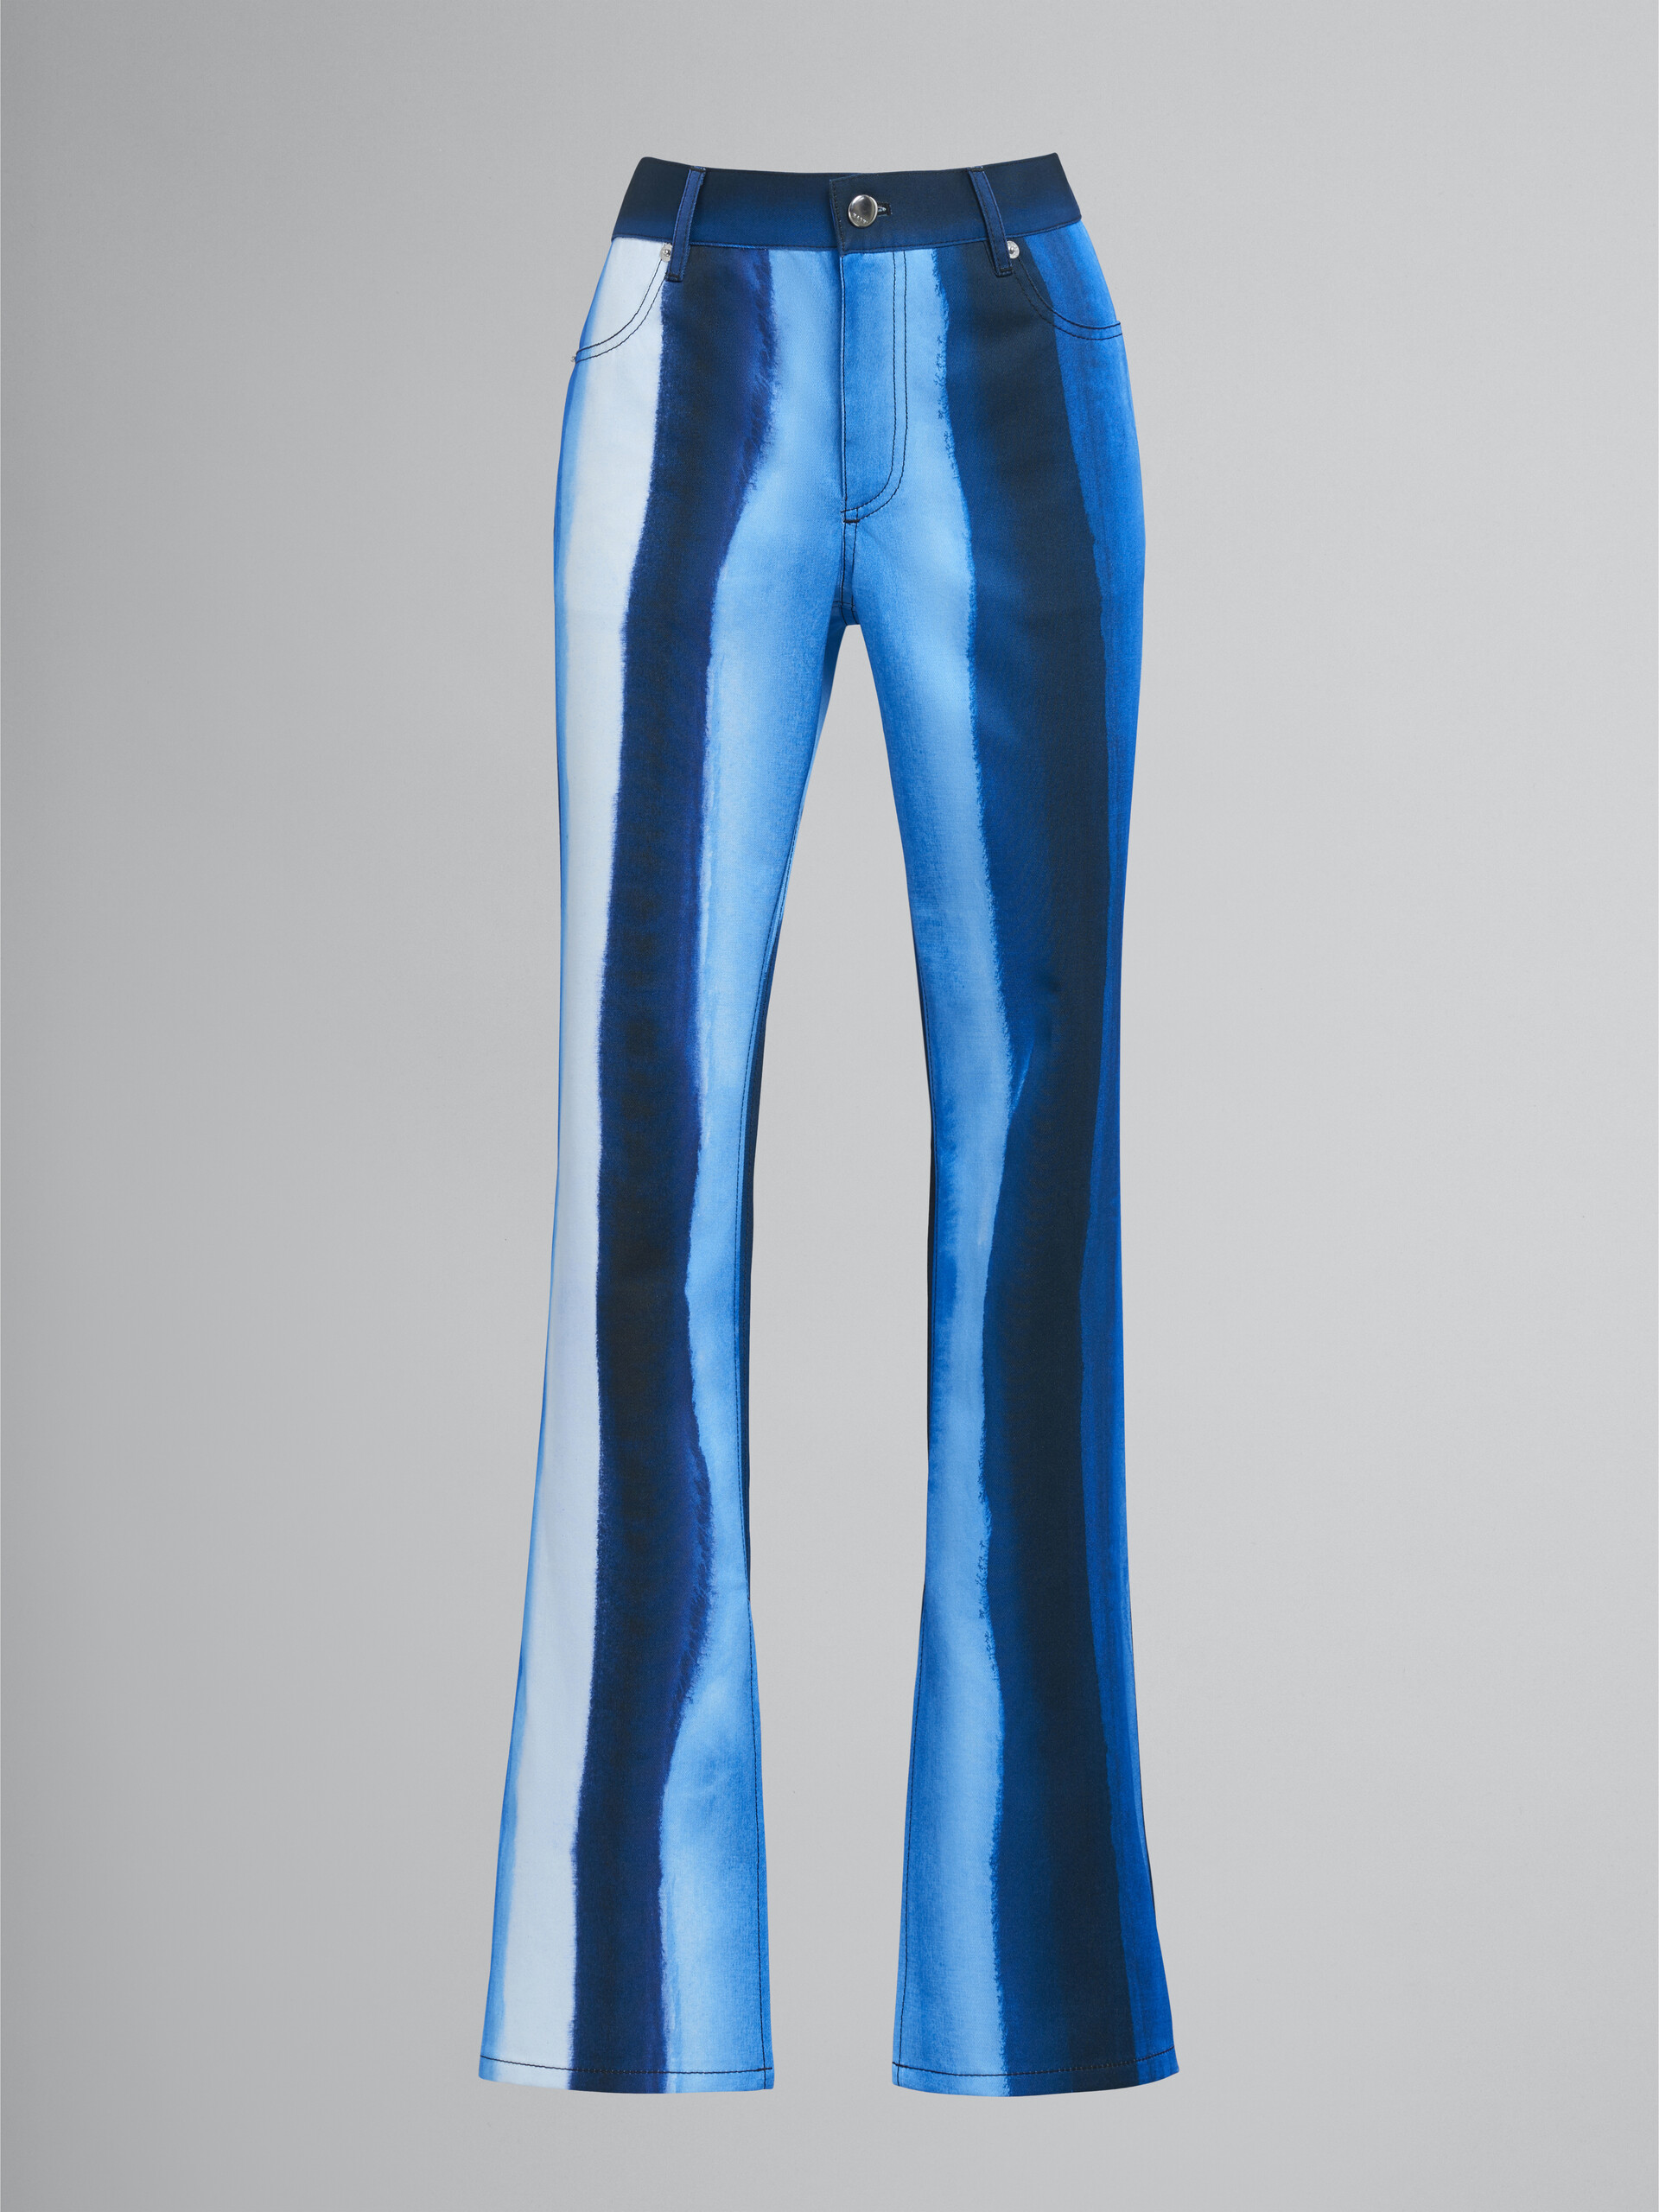 Pantaloni in drill stampa Waterfall Stripe - Pantaloni - Image 1